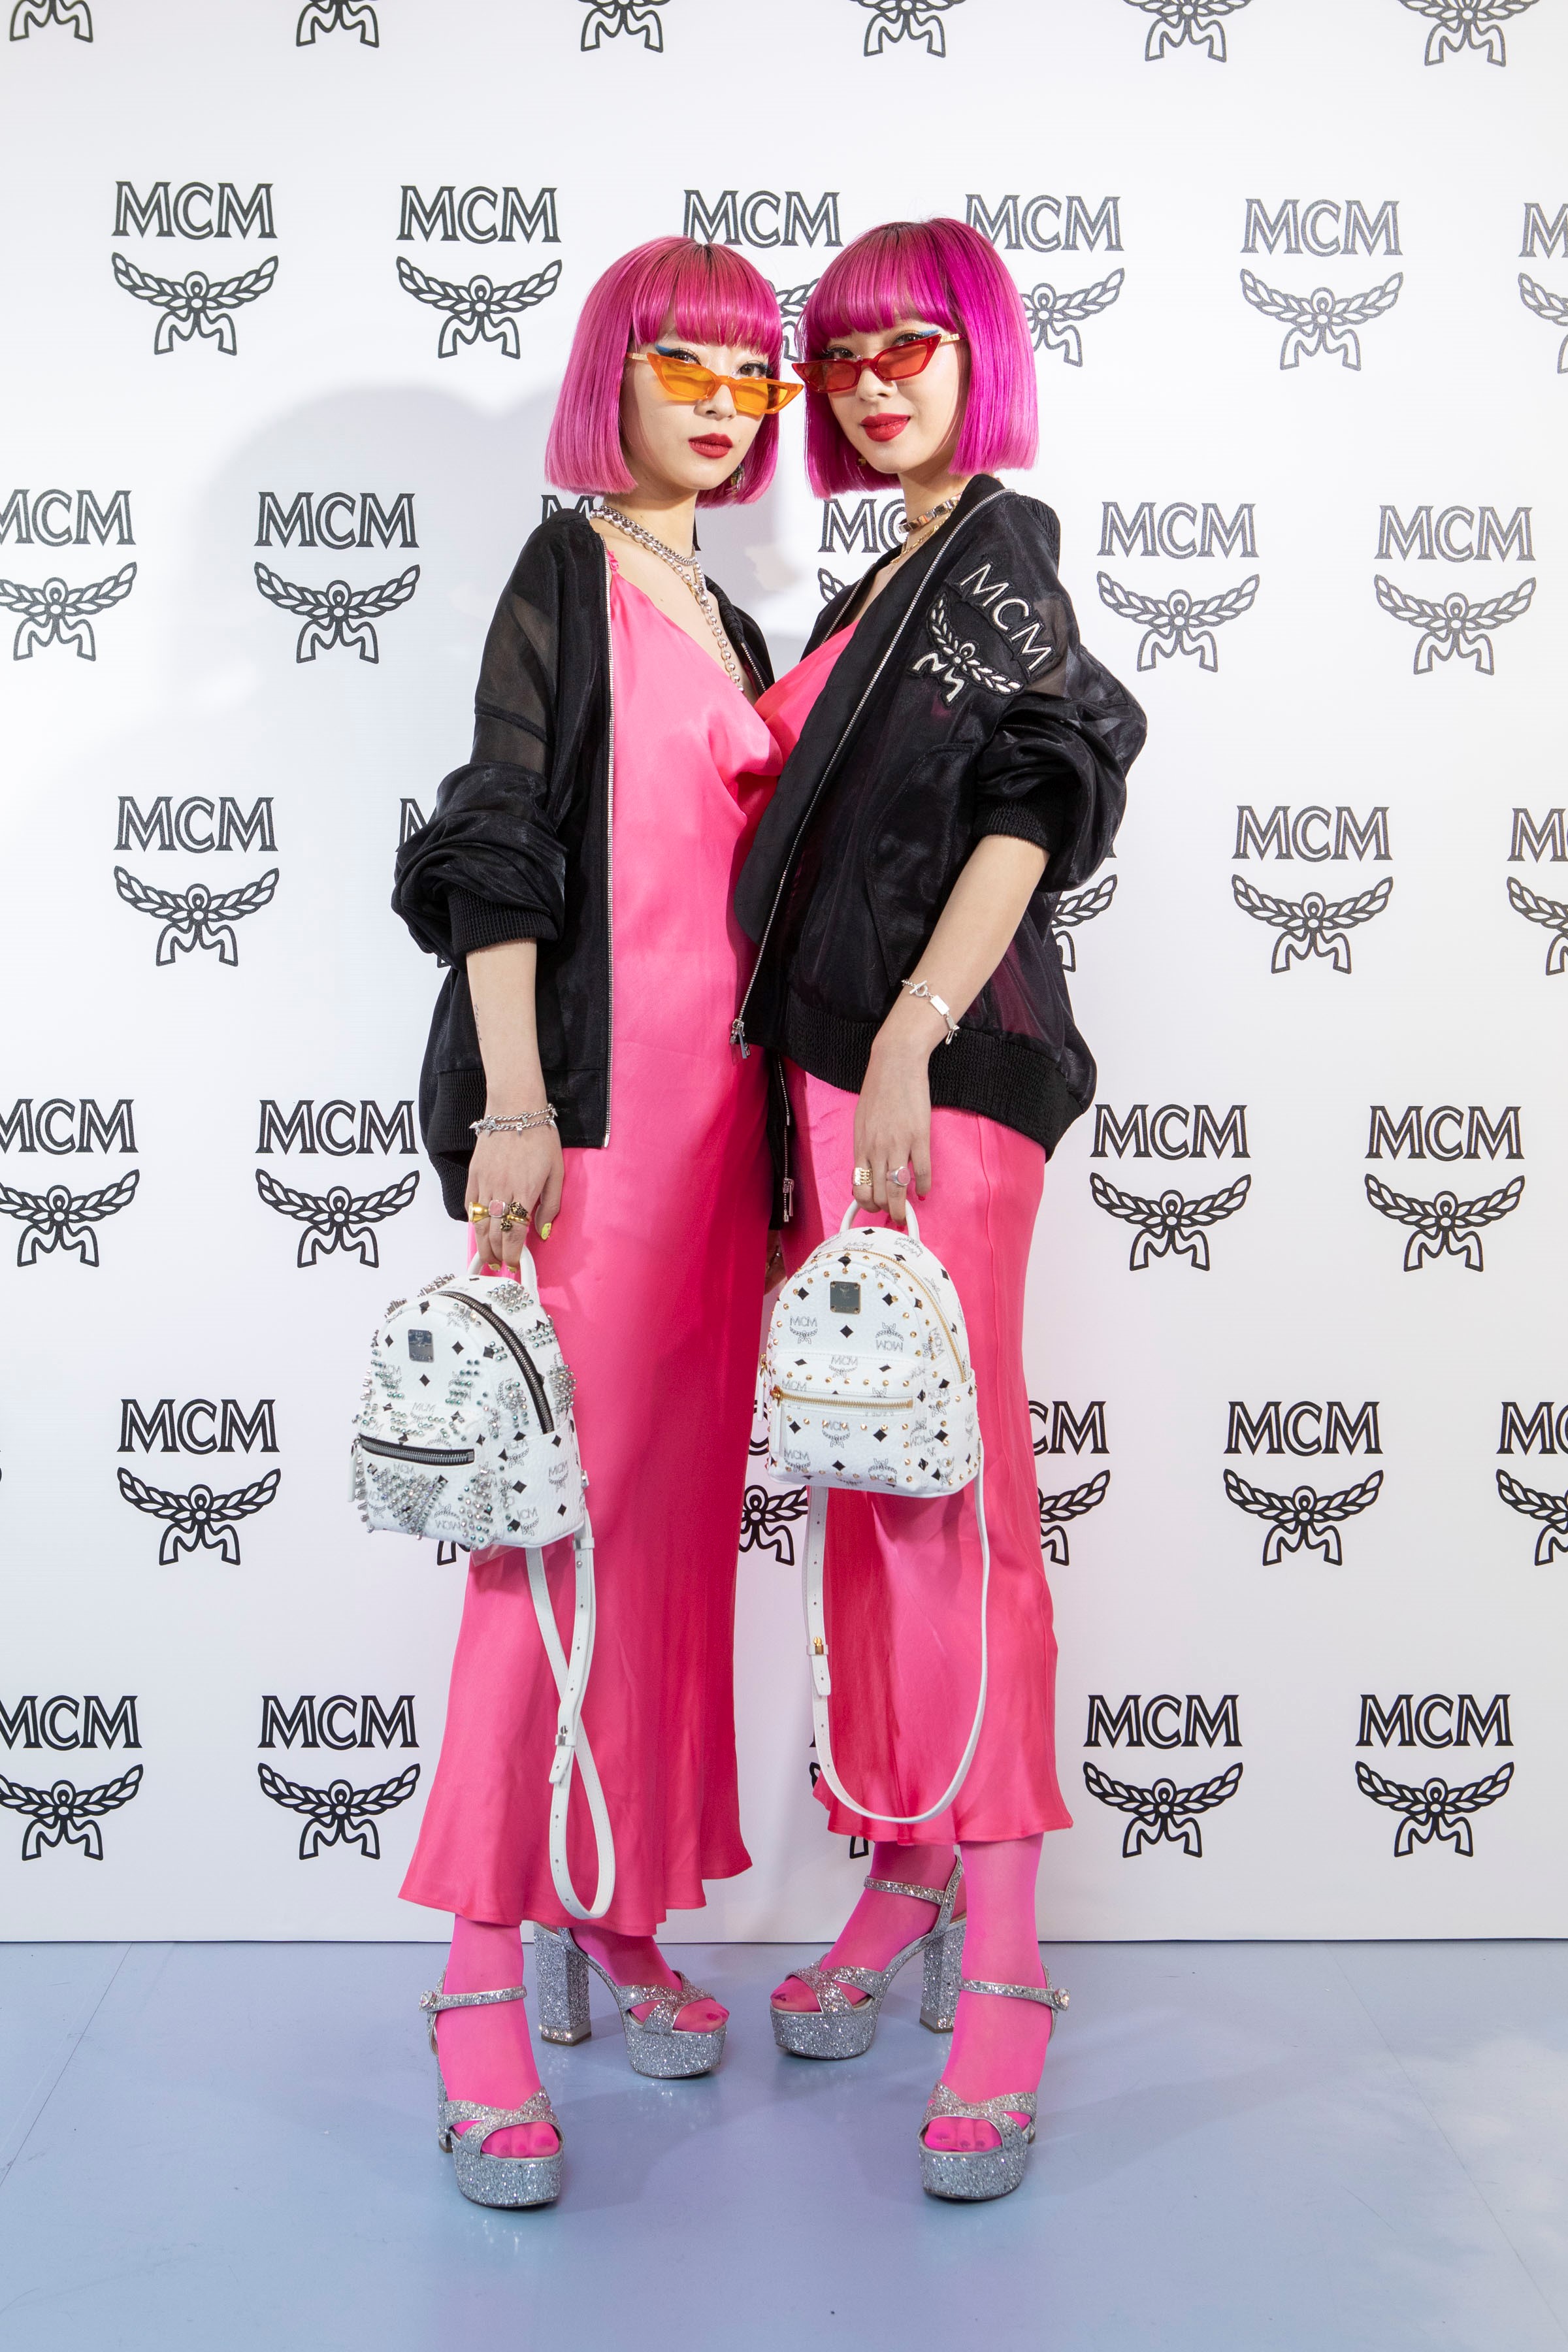 MCM携手木村光希庆祝东京银座旗舰店盛大开幕 全球最大旗舰店将艺术、时尚与文化相融合 